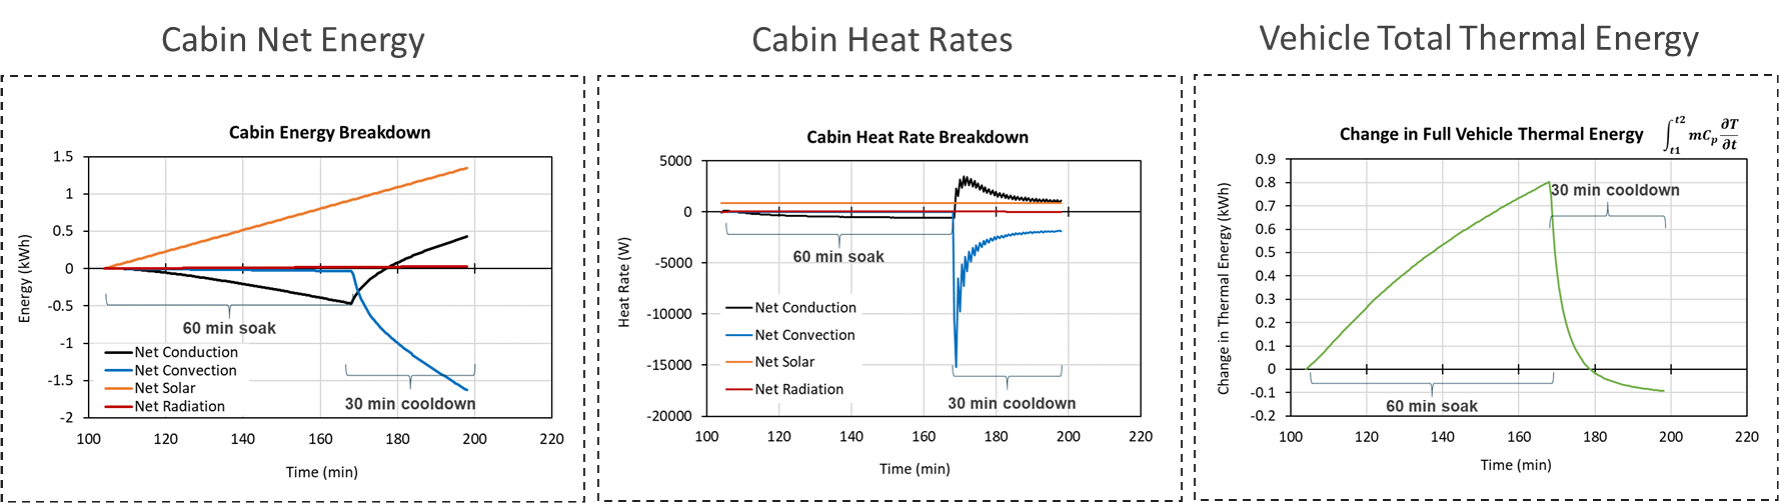 Cabin Net Energy